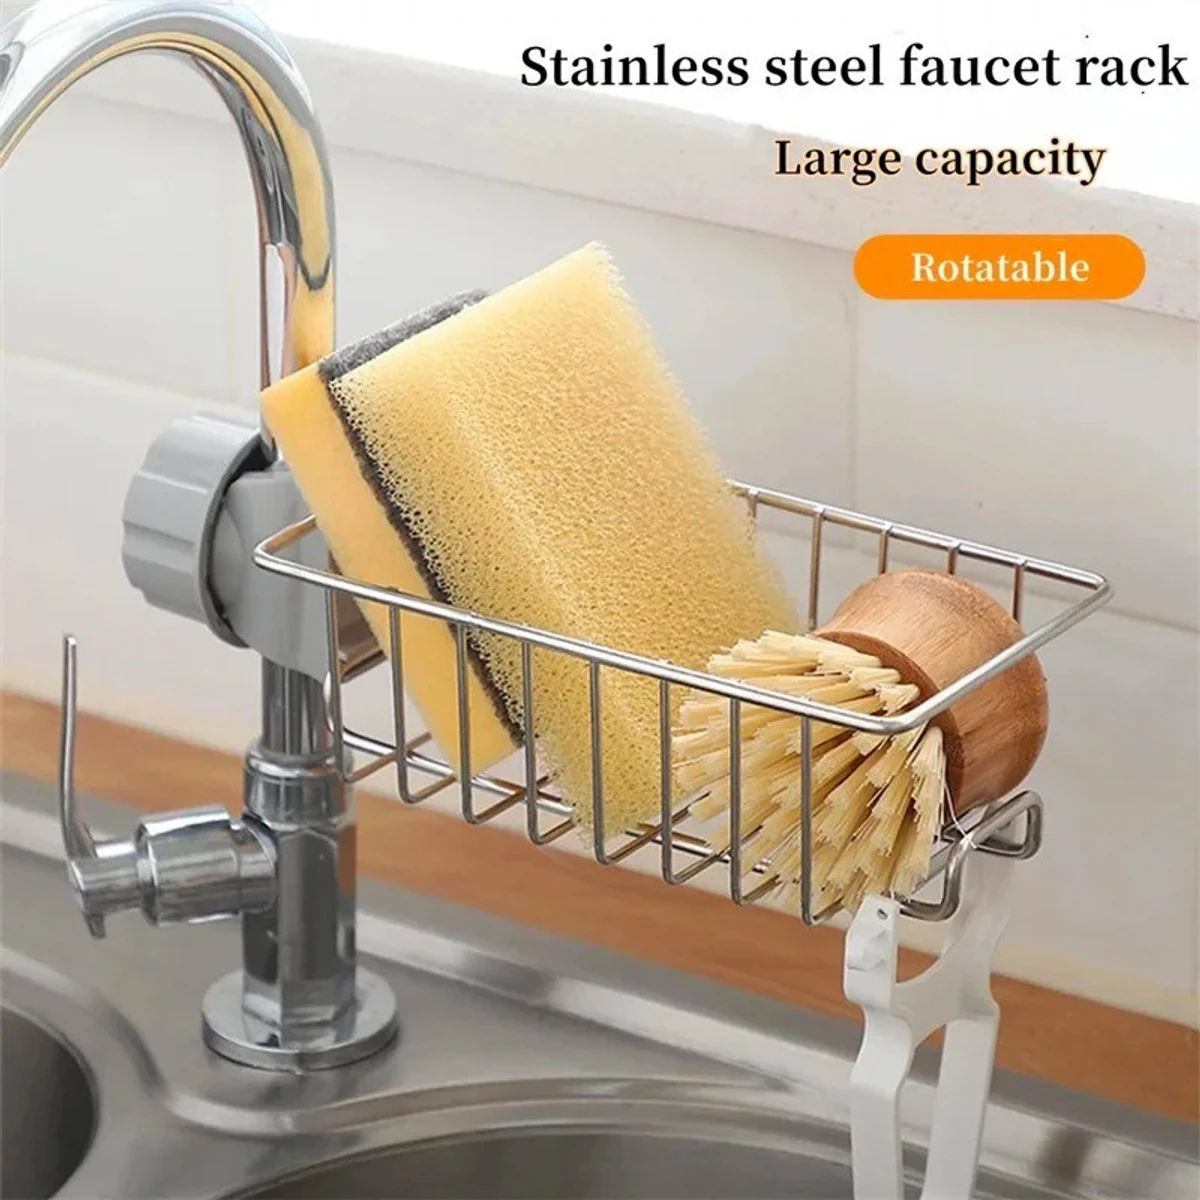 Stainless steel kitchen faucet storage shelf